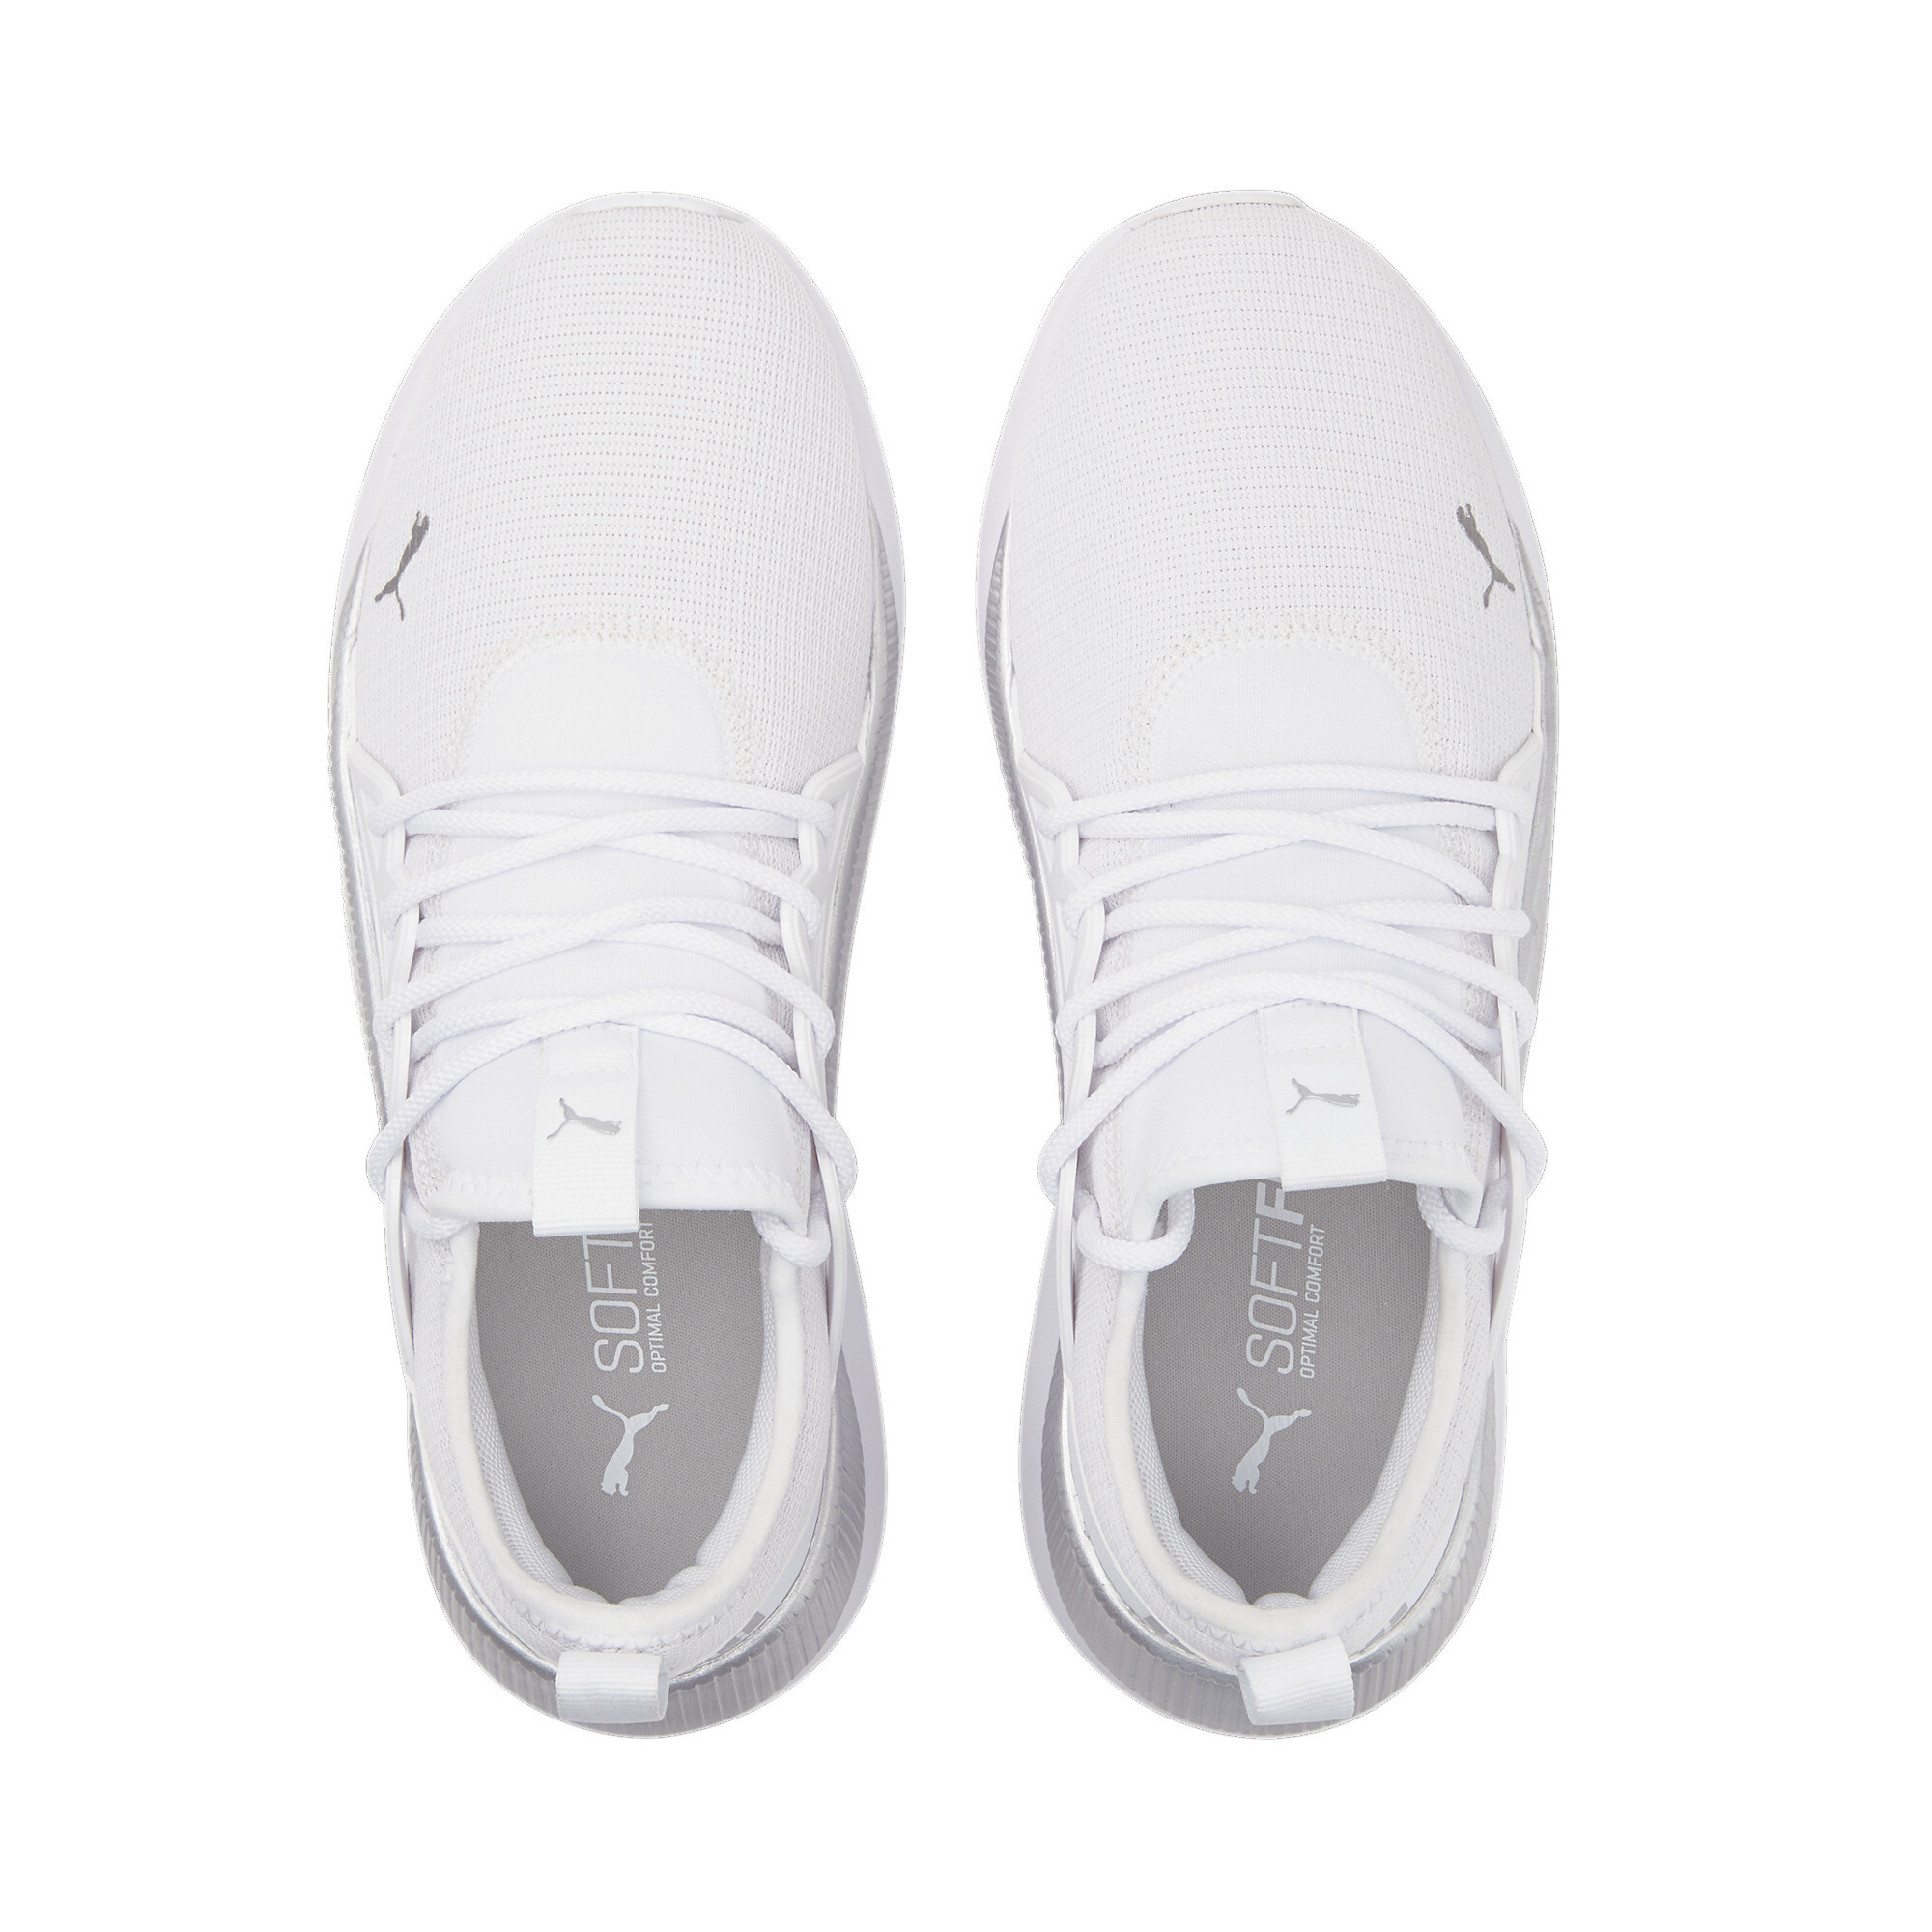 Women's PUMA Pacer Future Allure Trainers Shoes In White/Silver, Size EU 42